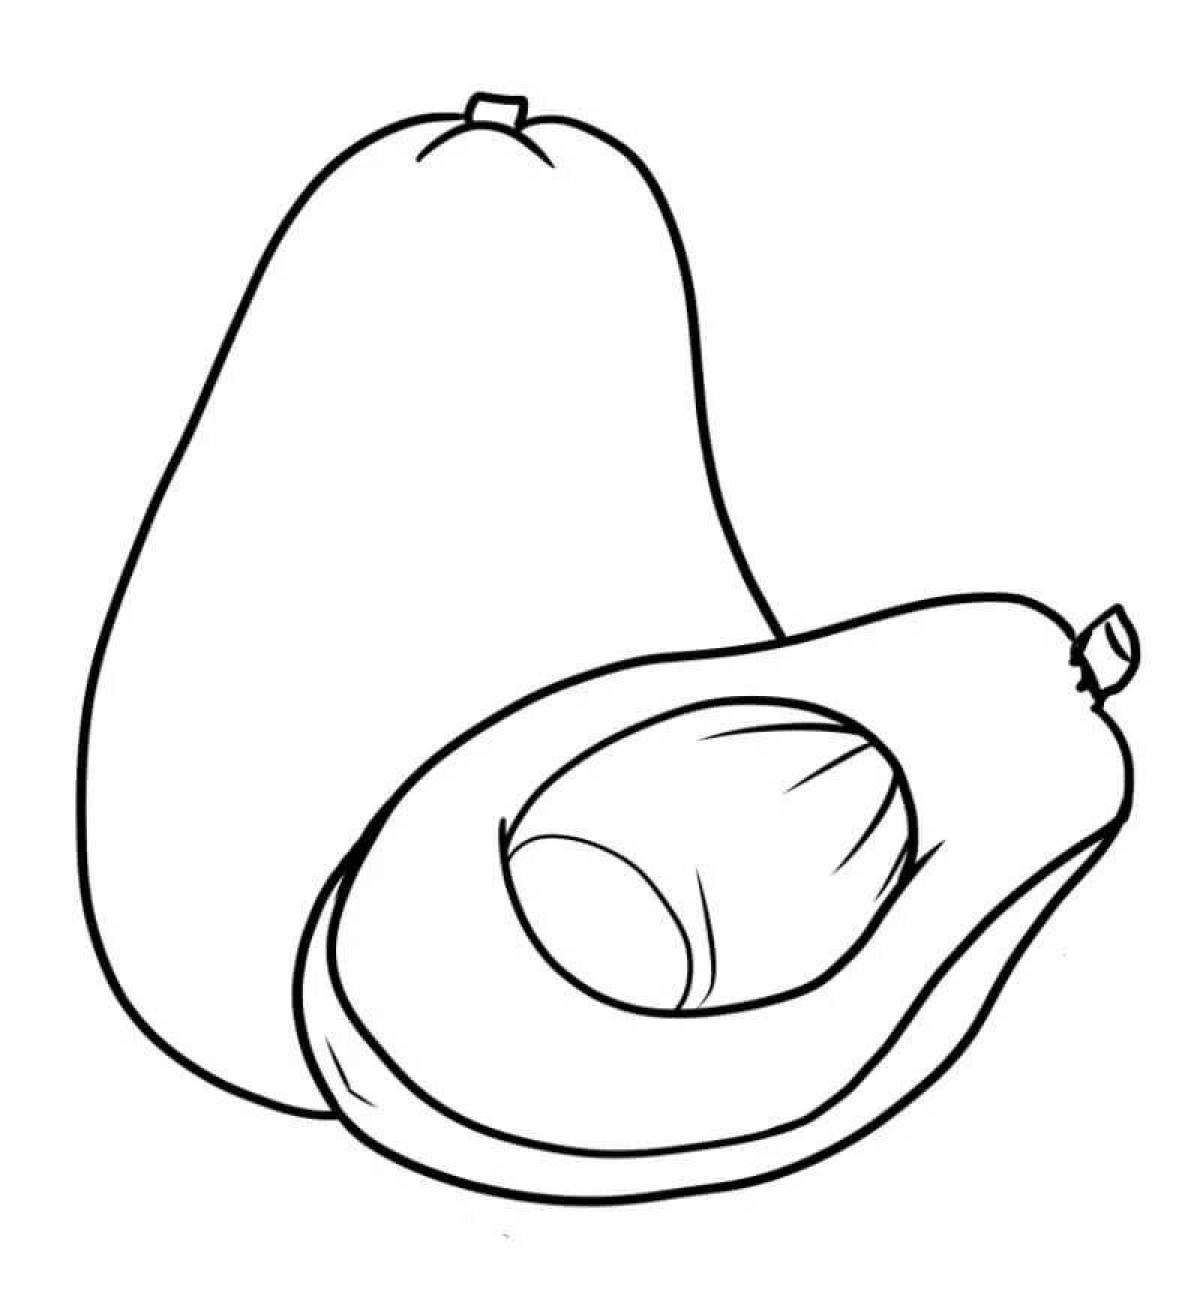 Avocado alluring drawing